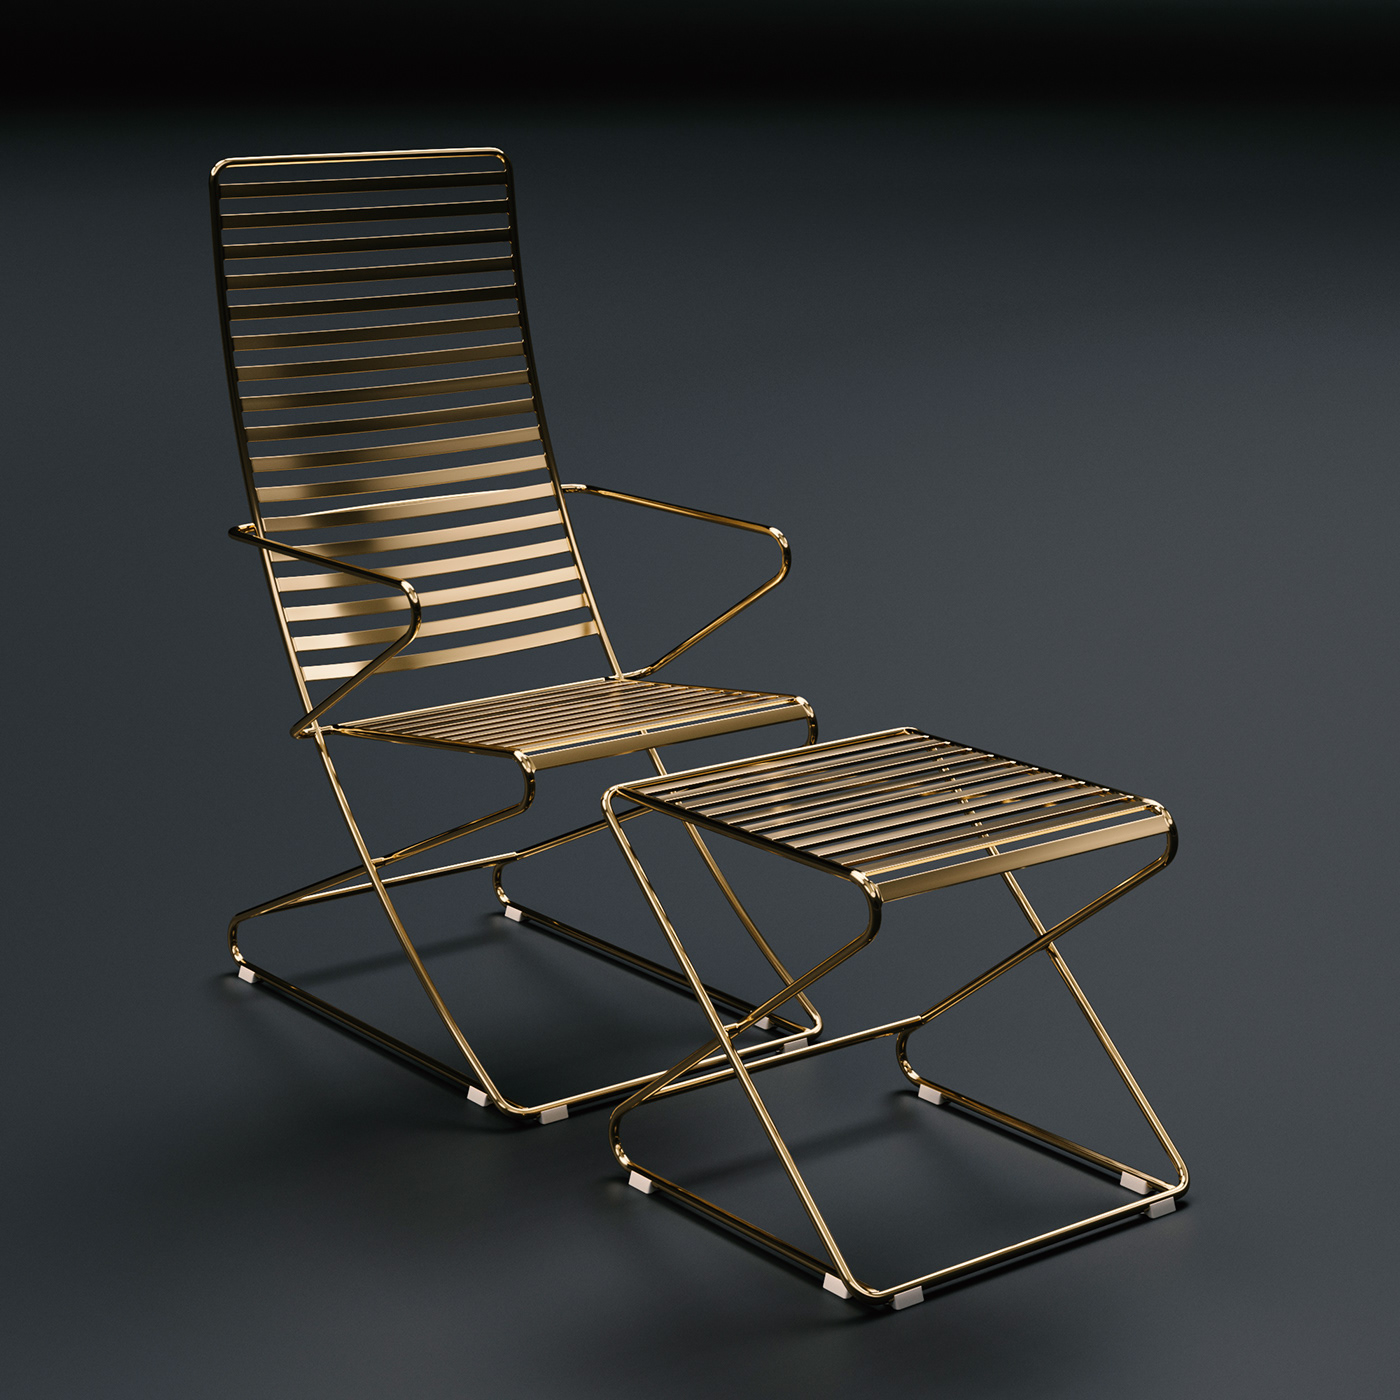 furniture 3D visualization 3ds max Render interior design  corona CGI exterior archviz